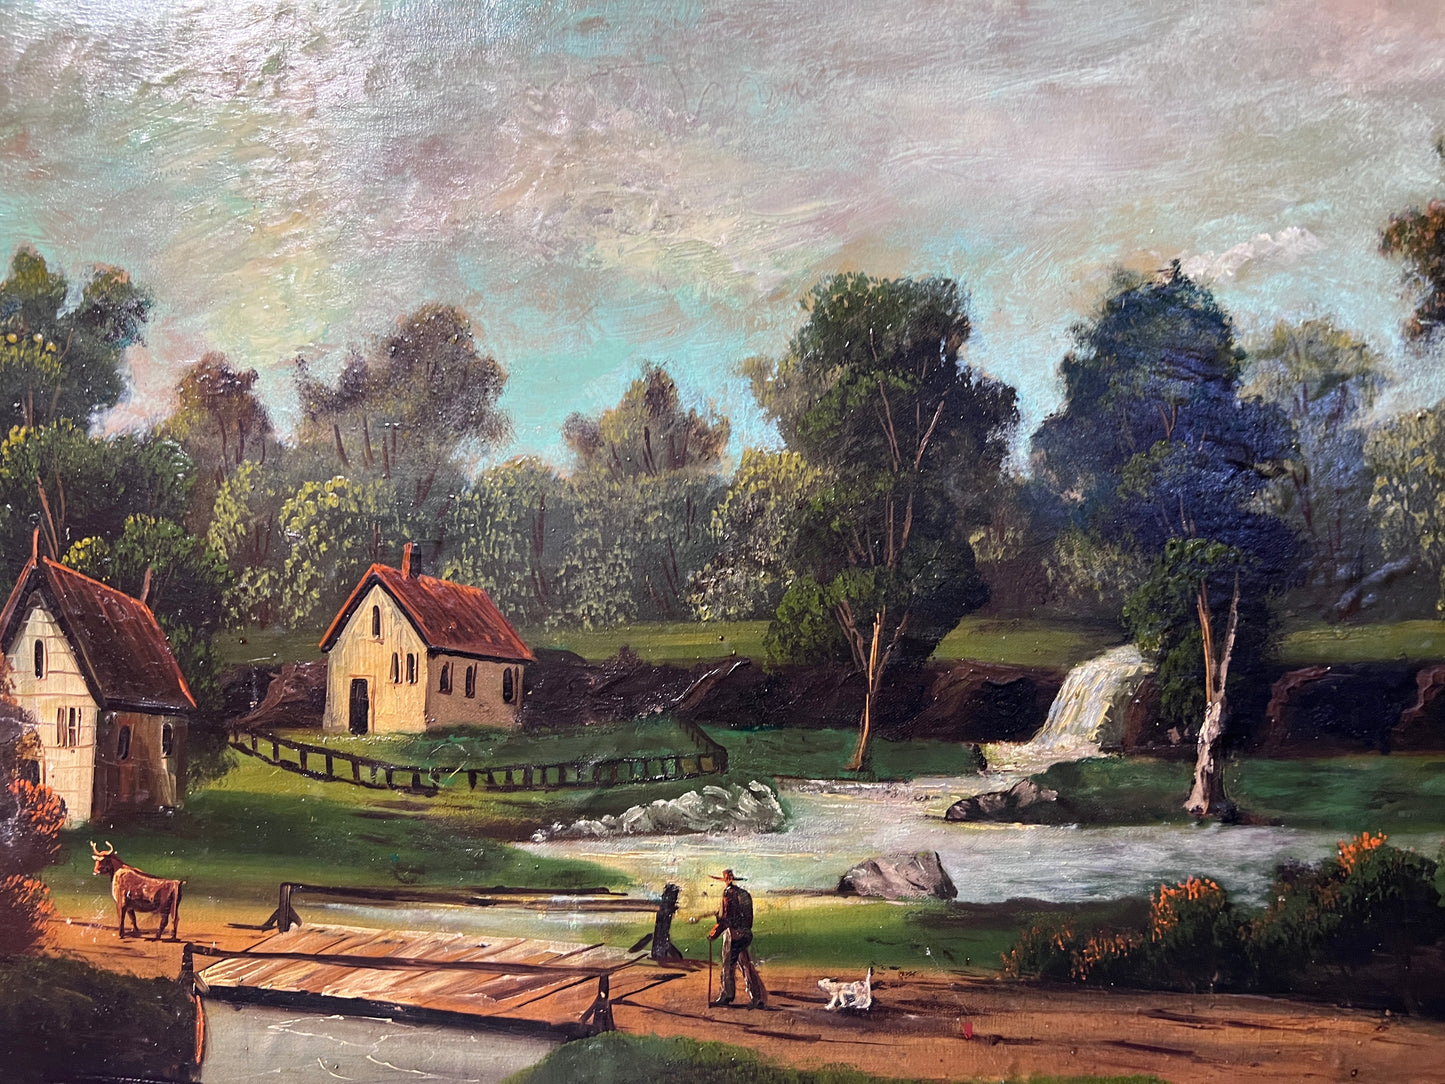 Antique oil painting on canvas, Rural Landscape, Figures, Unsigned, Framed